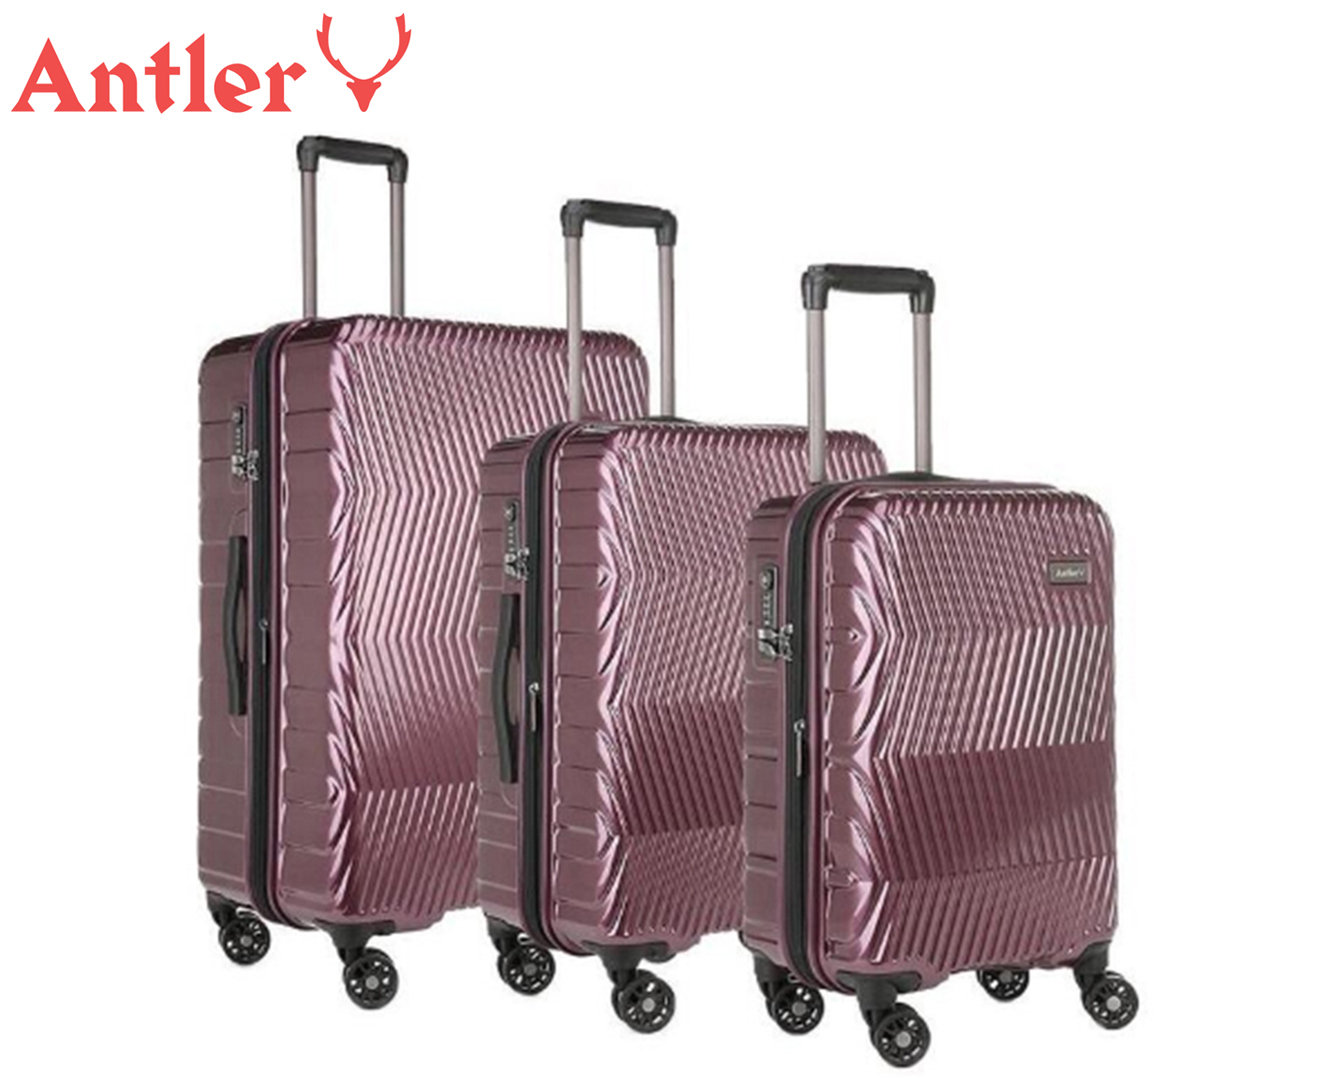 Antler Viva 3-Piece Hardcase Luggage/Suitcase Set - Aubergine | Catch.co.nz